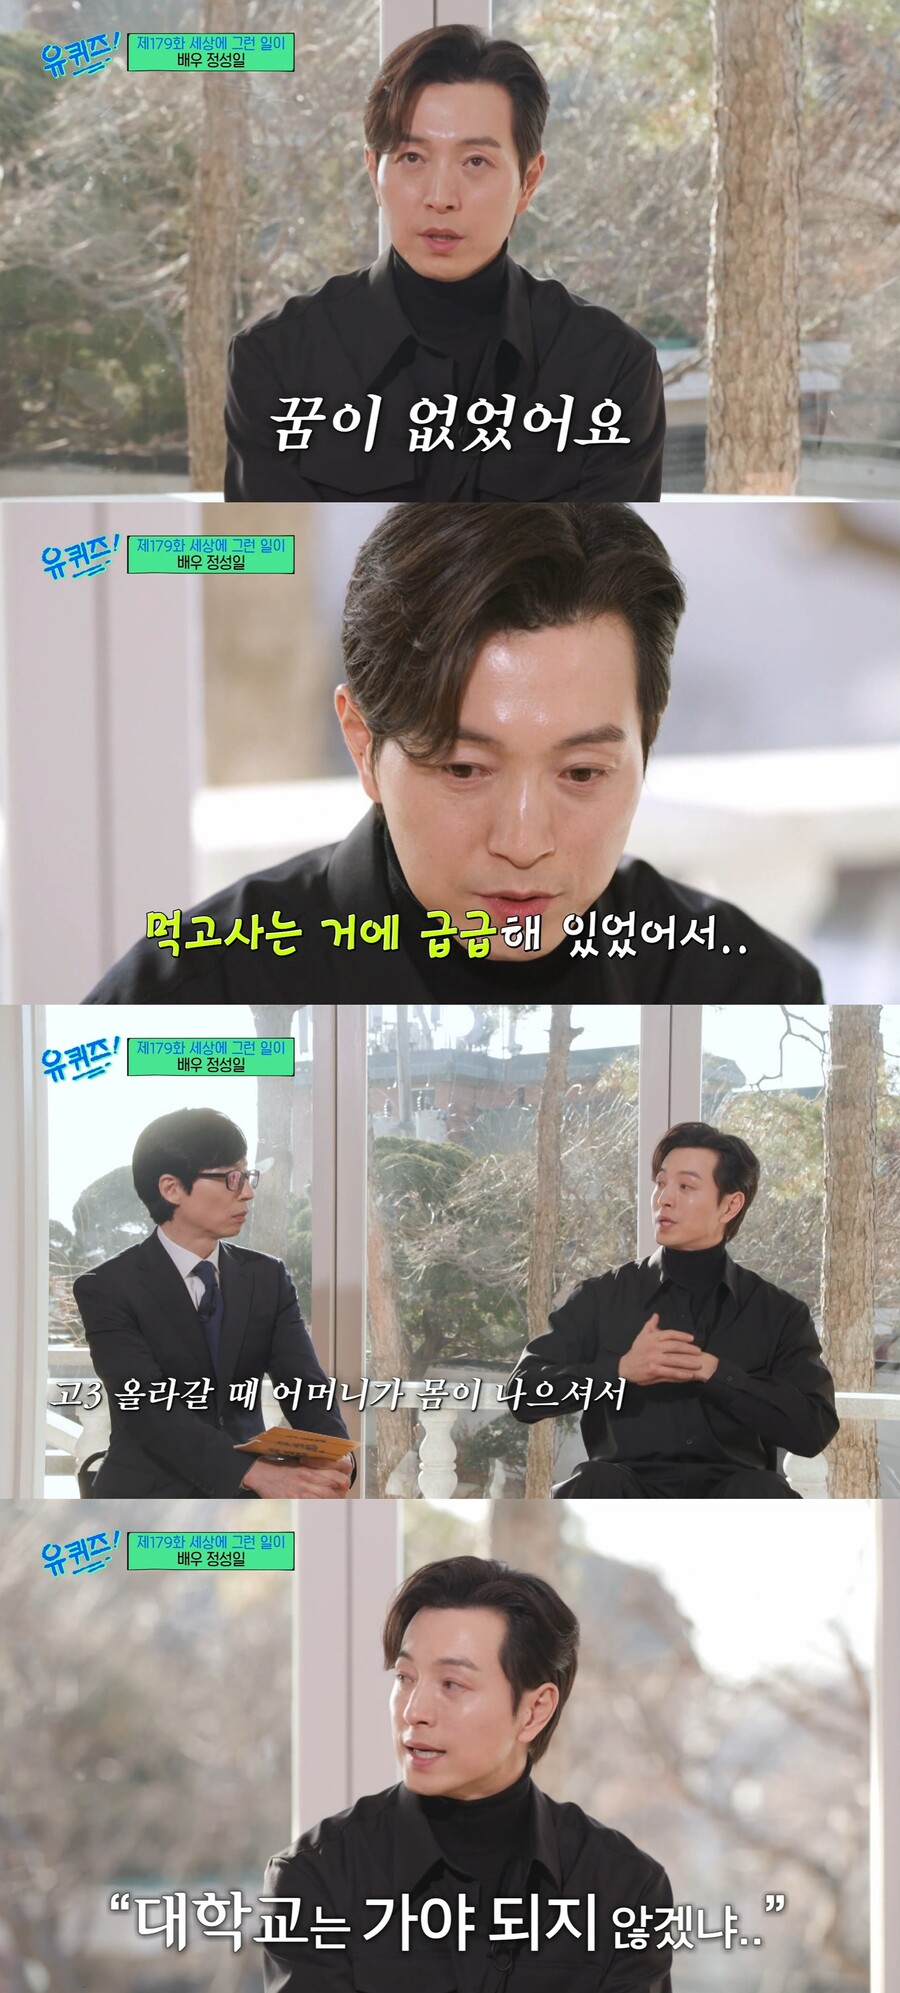 ▲ tvN 예능프로그램 '유퀴즈' 배우 정성일. 출처| tvN